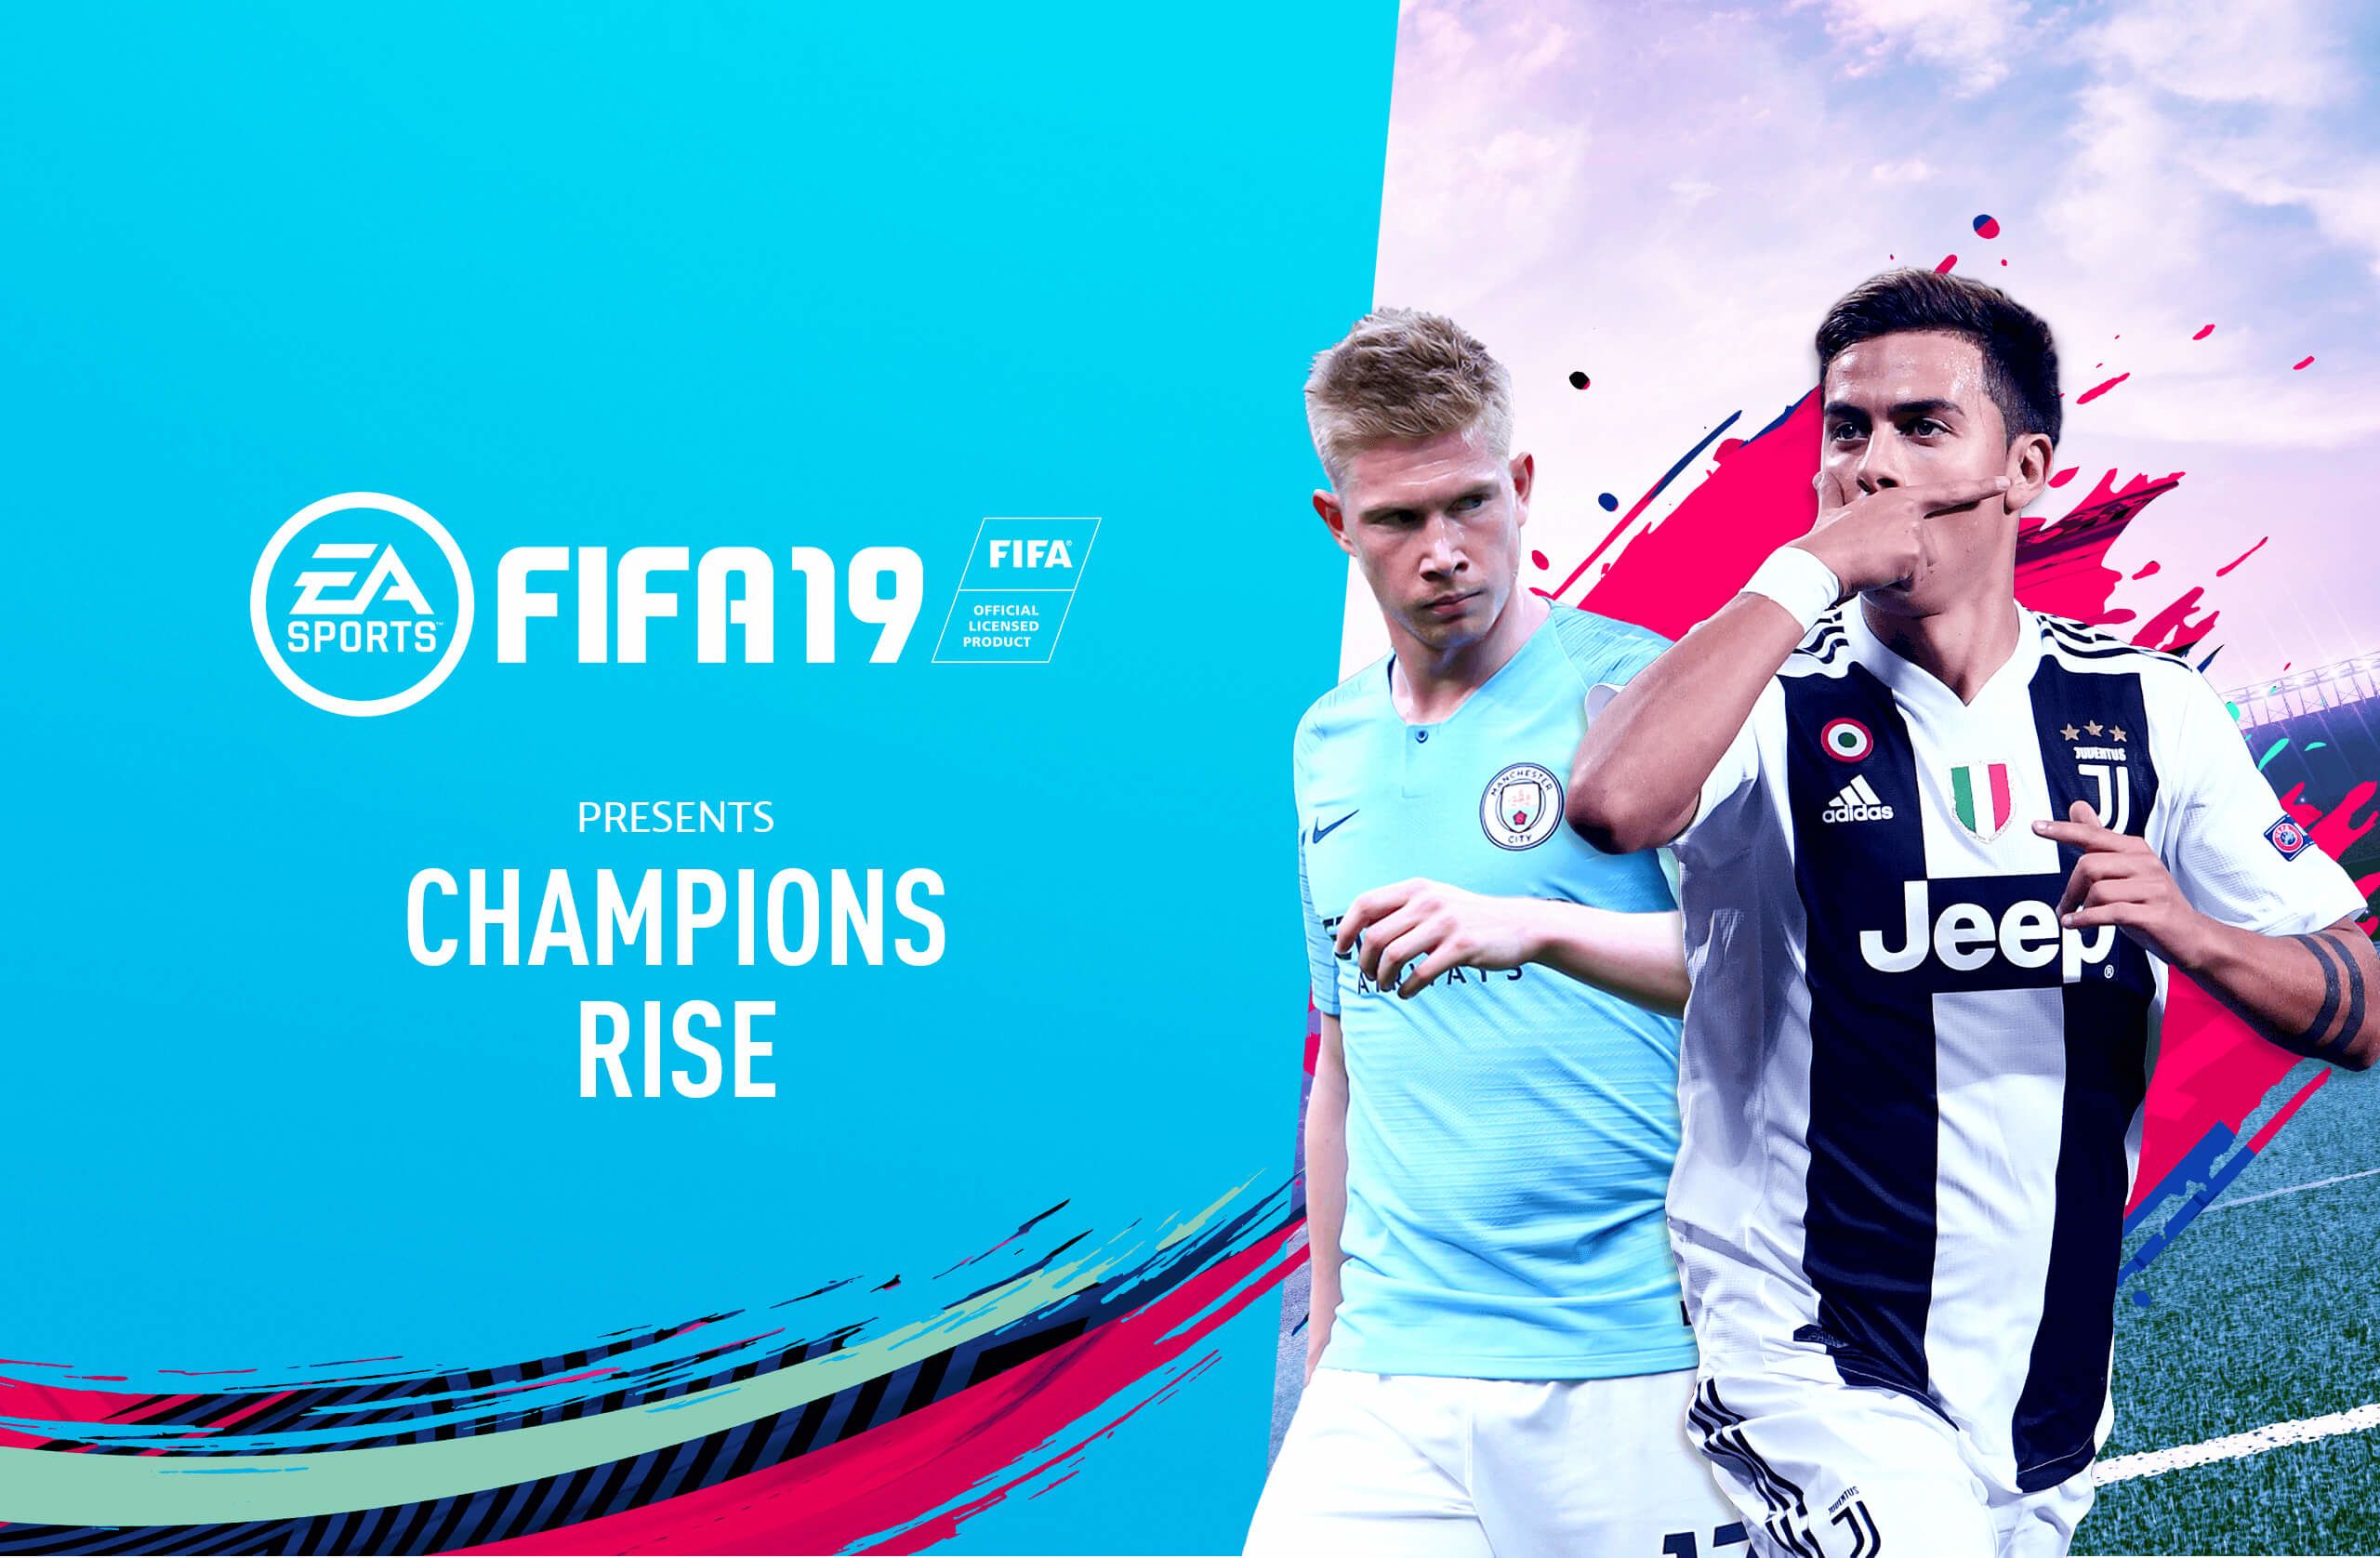 Fifa 19 Presents Champions Rise